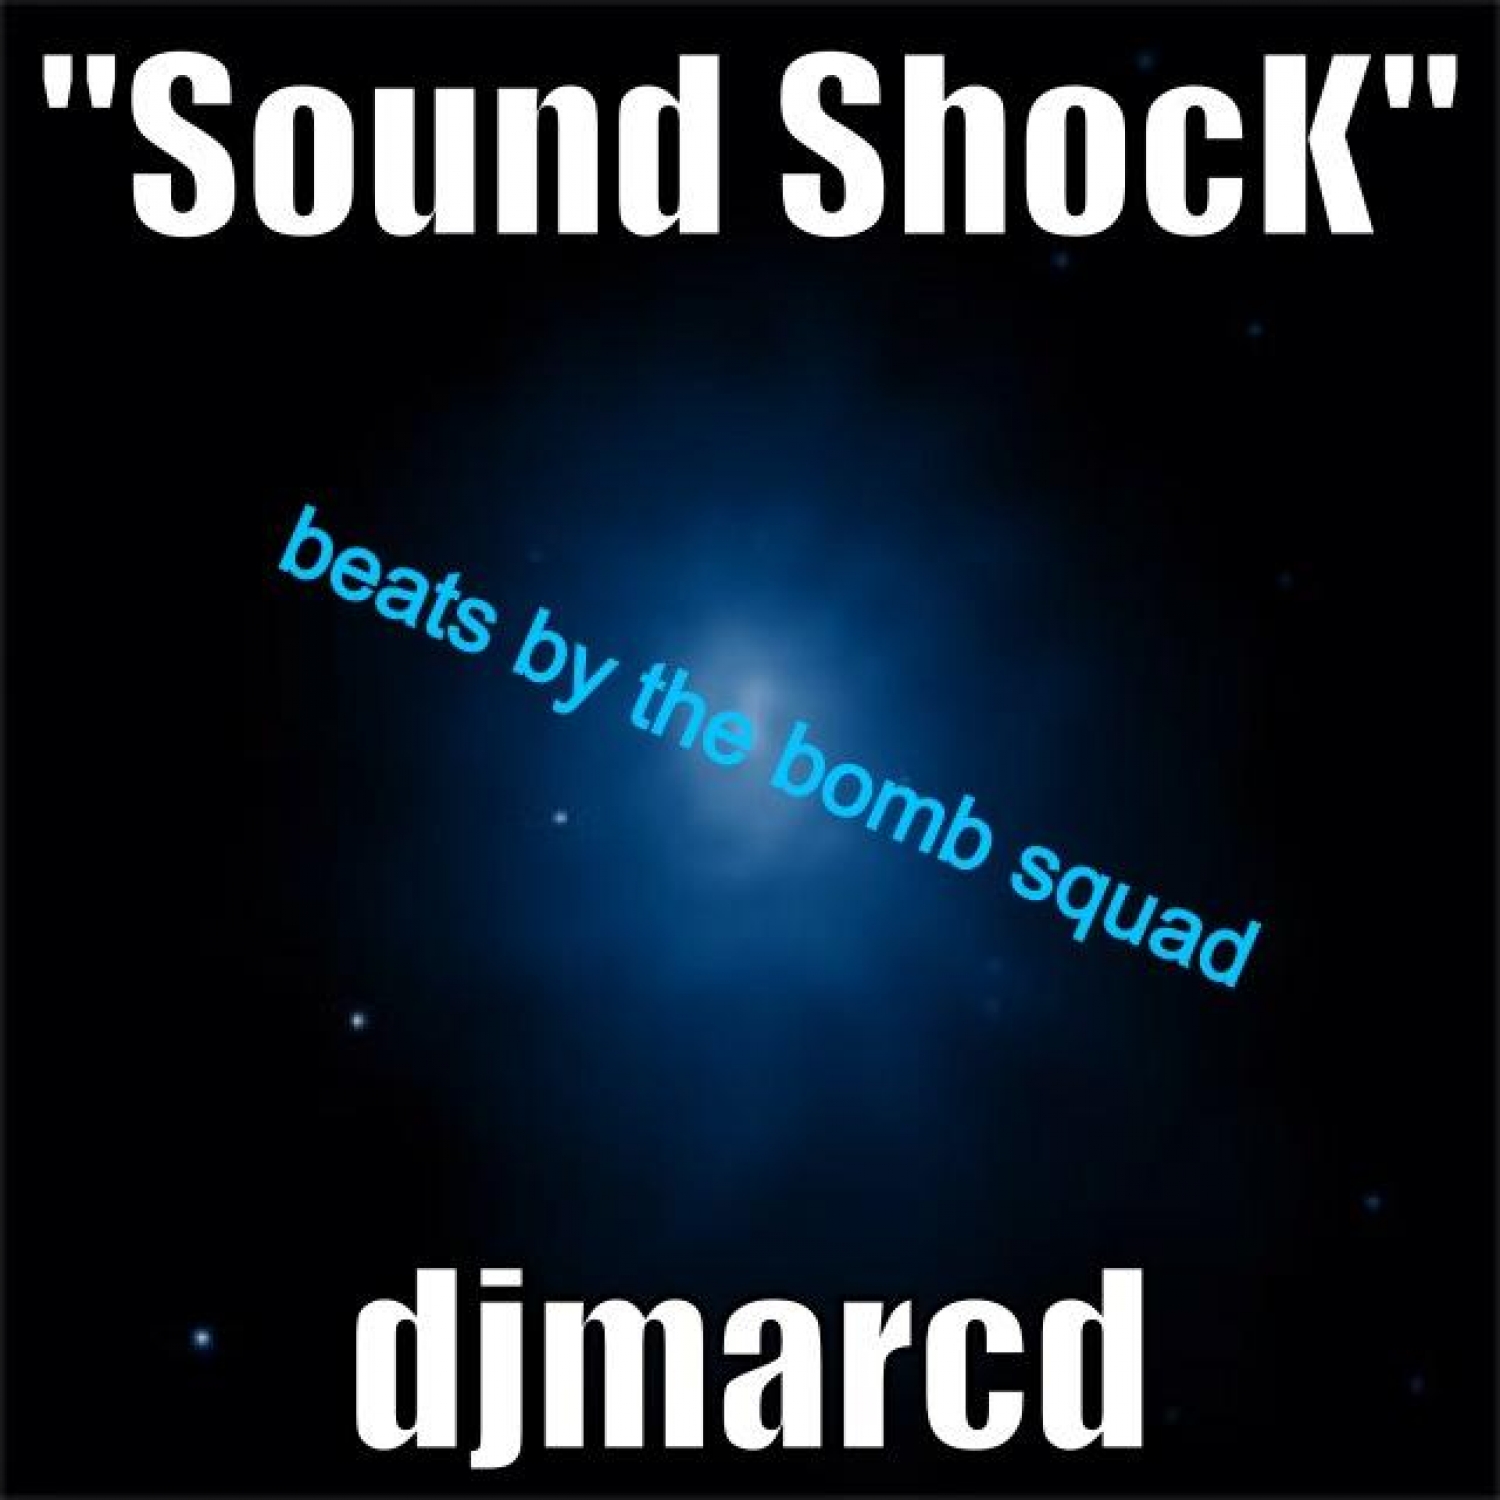 Sound Shock (feat. Public Enemy & Bomb Squad) - Single